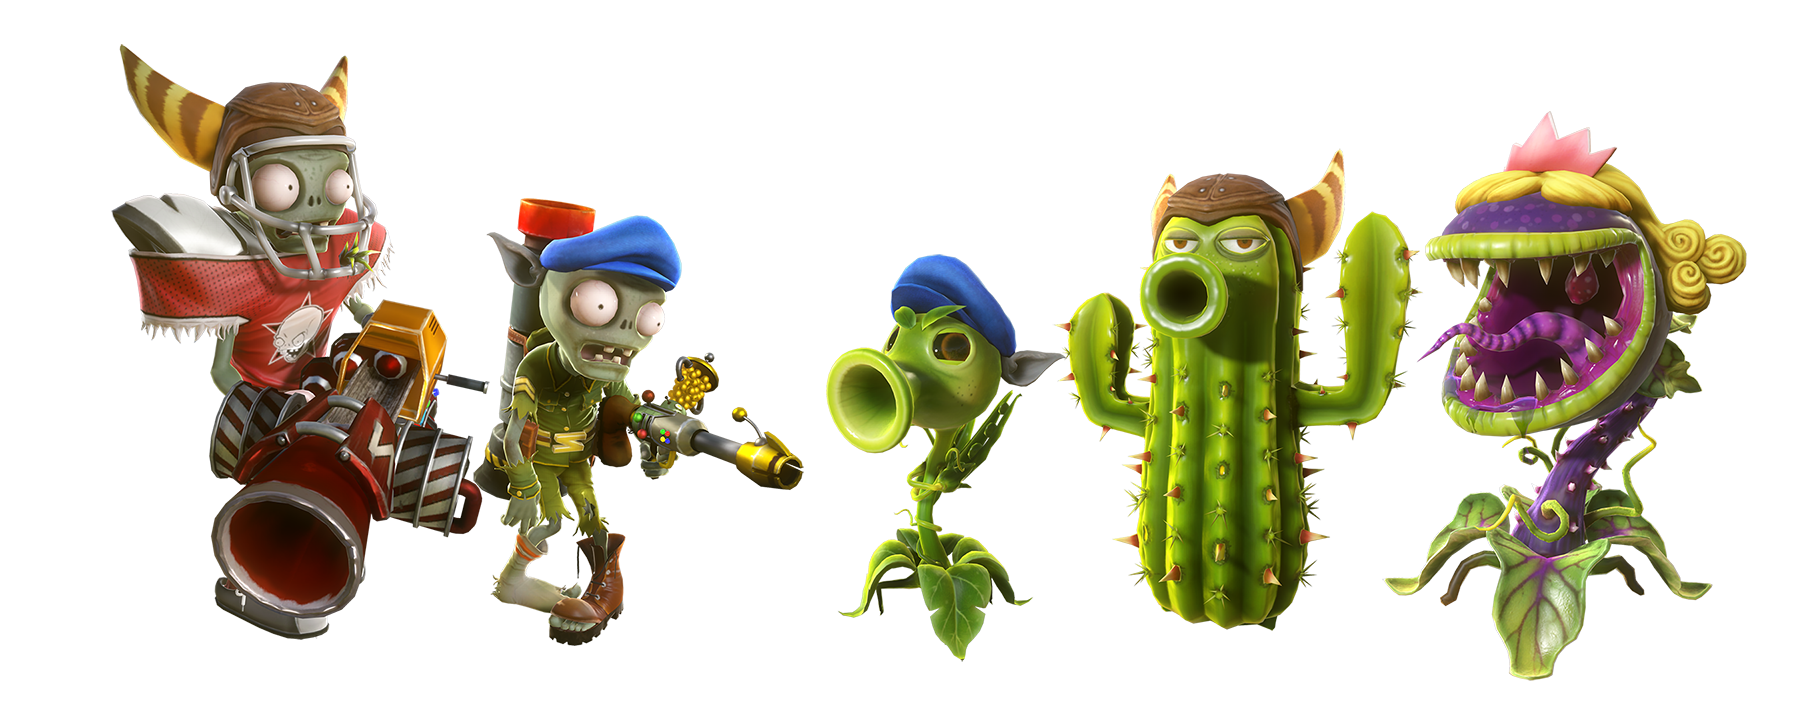 Download Plants Vs Zombies Garden Warfare Picture HQ PNG Image